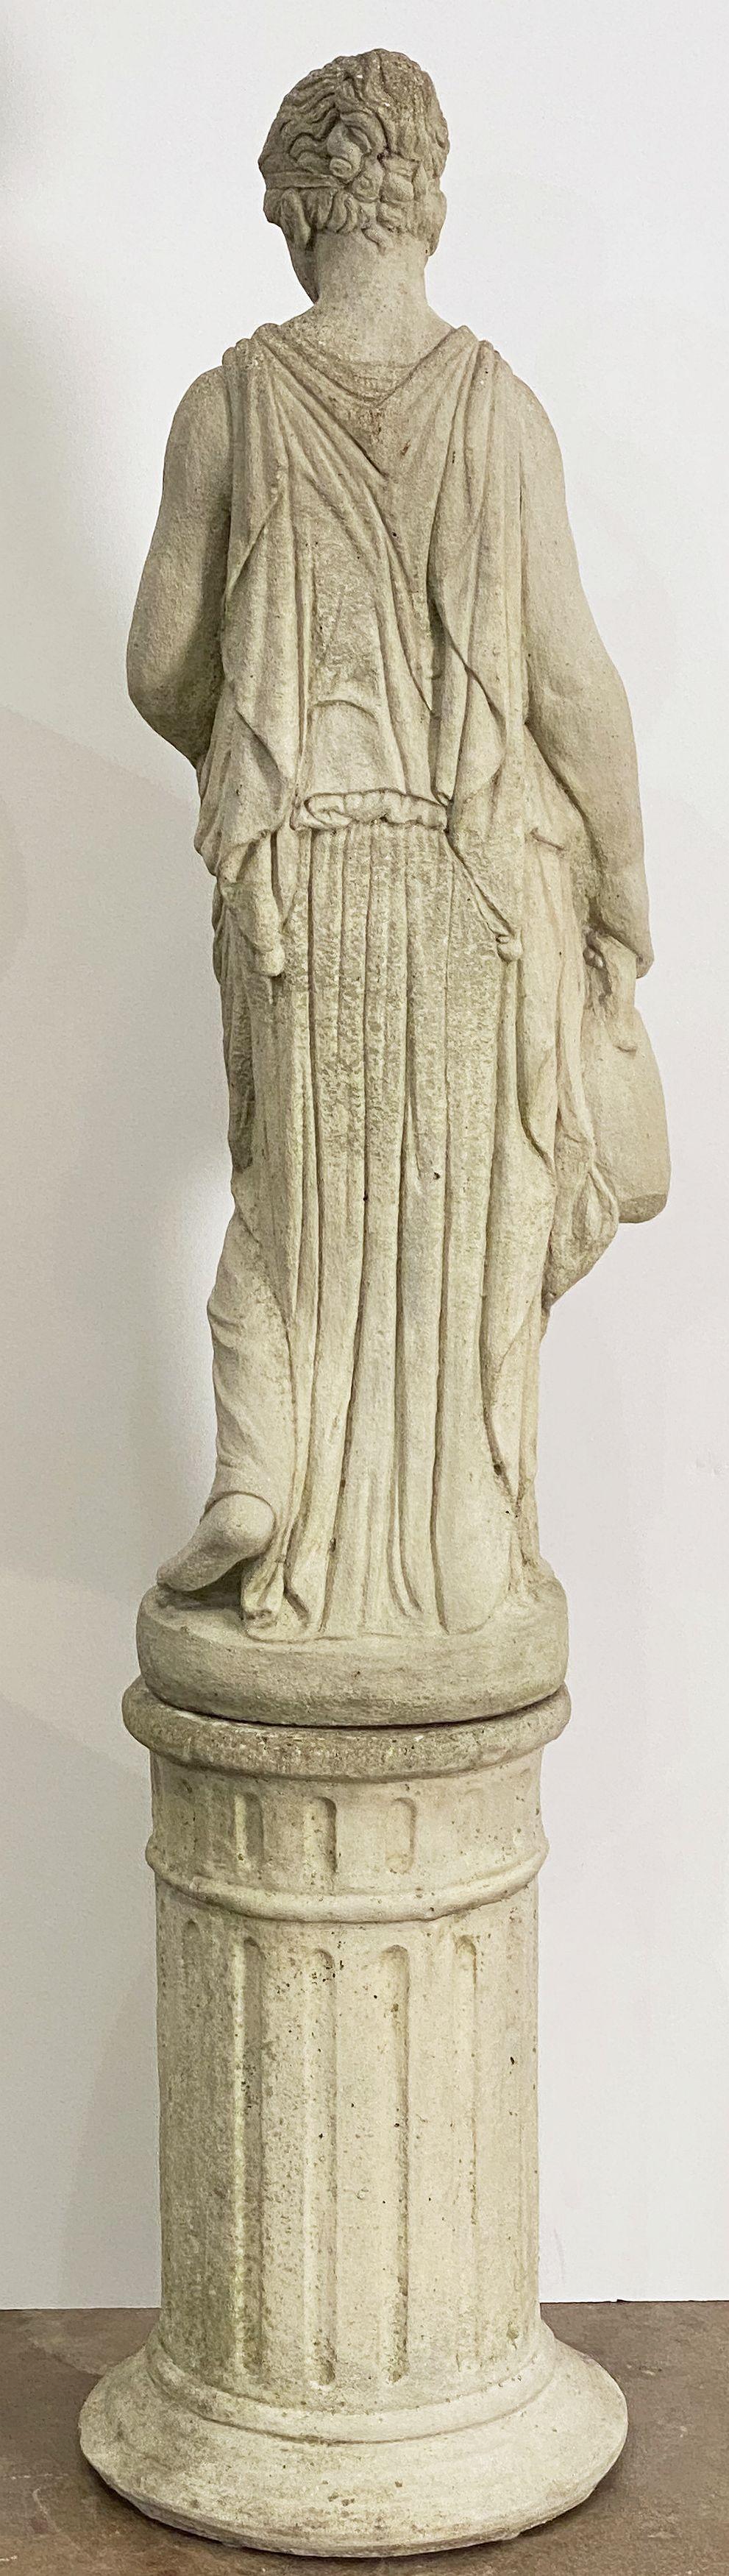 Large English Garden Stone Statue of a Maiden on Column Pedestal (H 59 1/4) 7